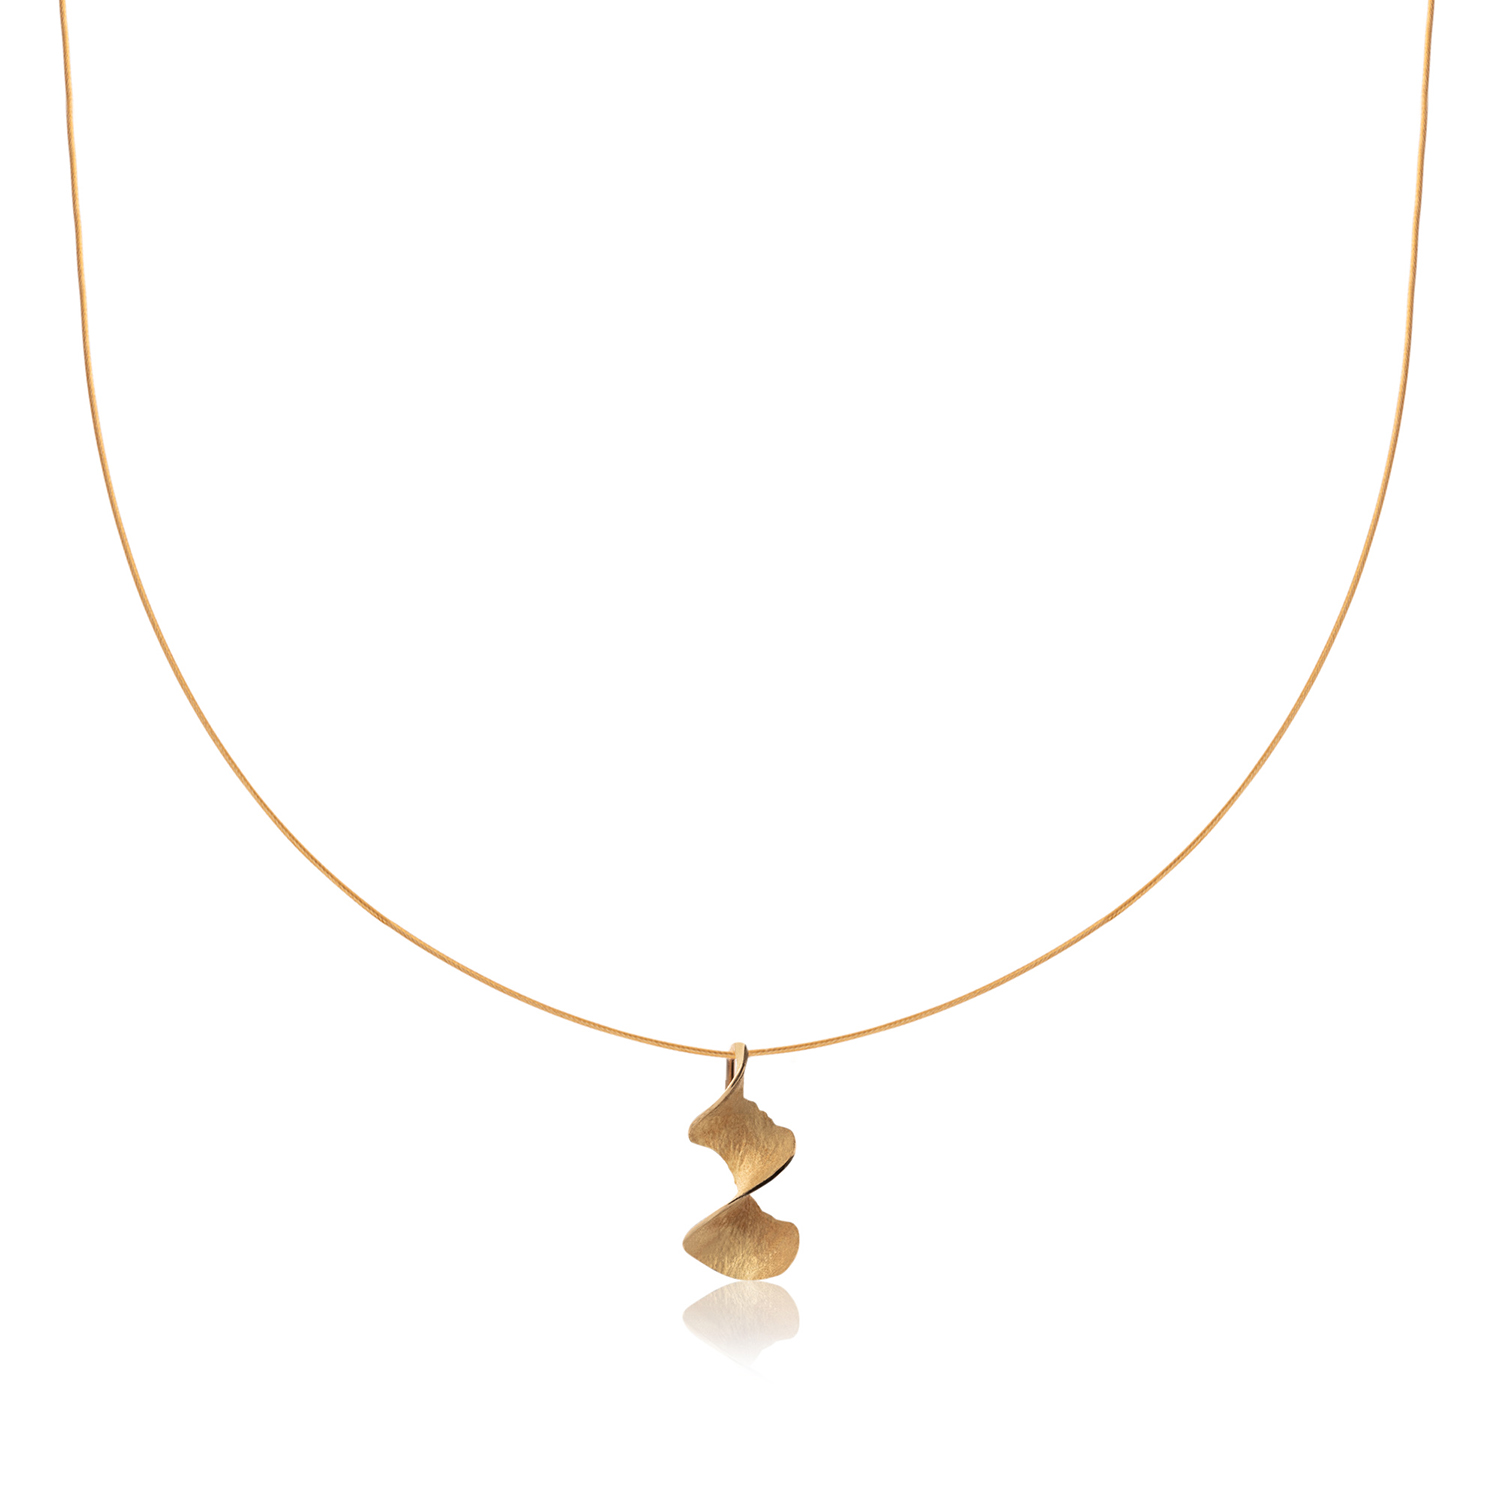 Gold Encenalls necklace